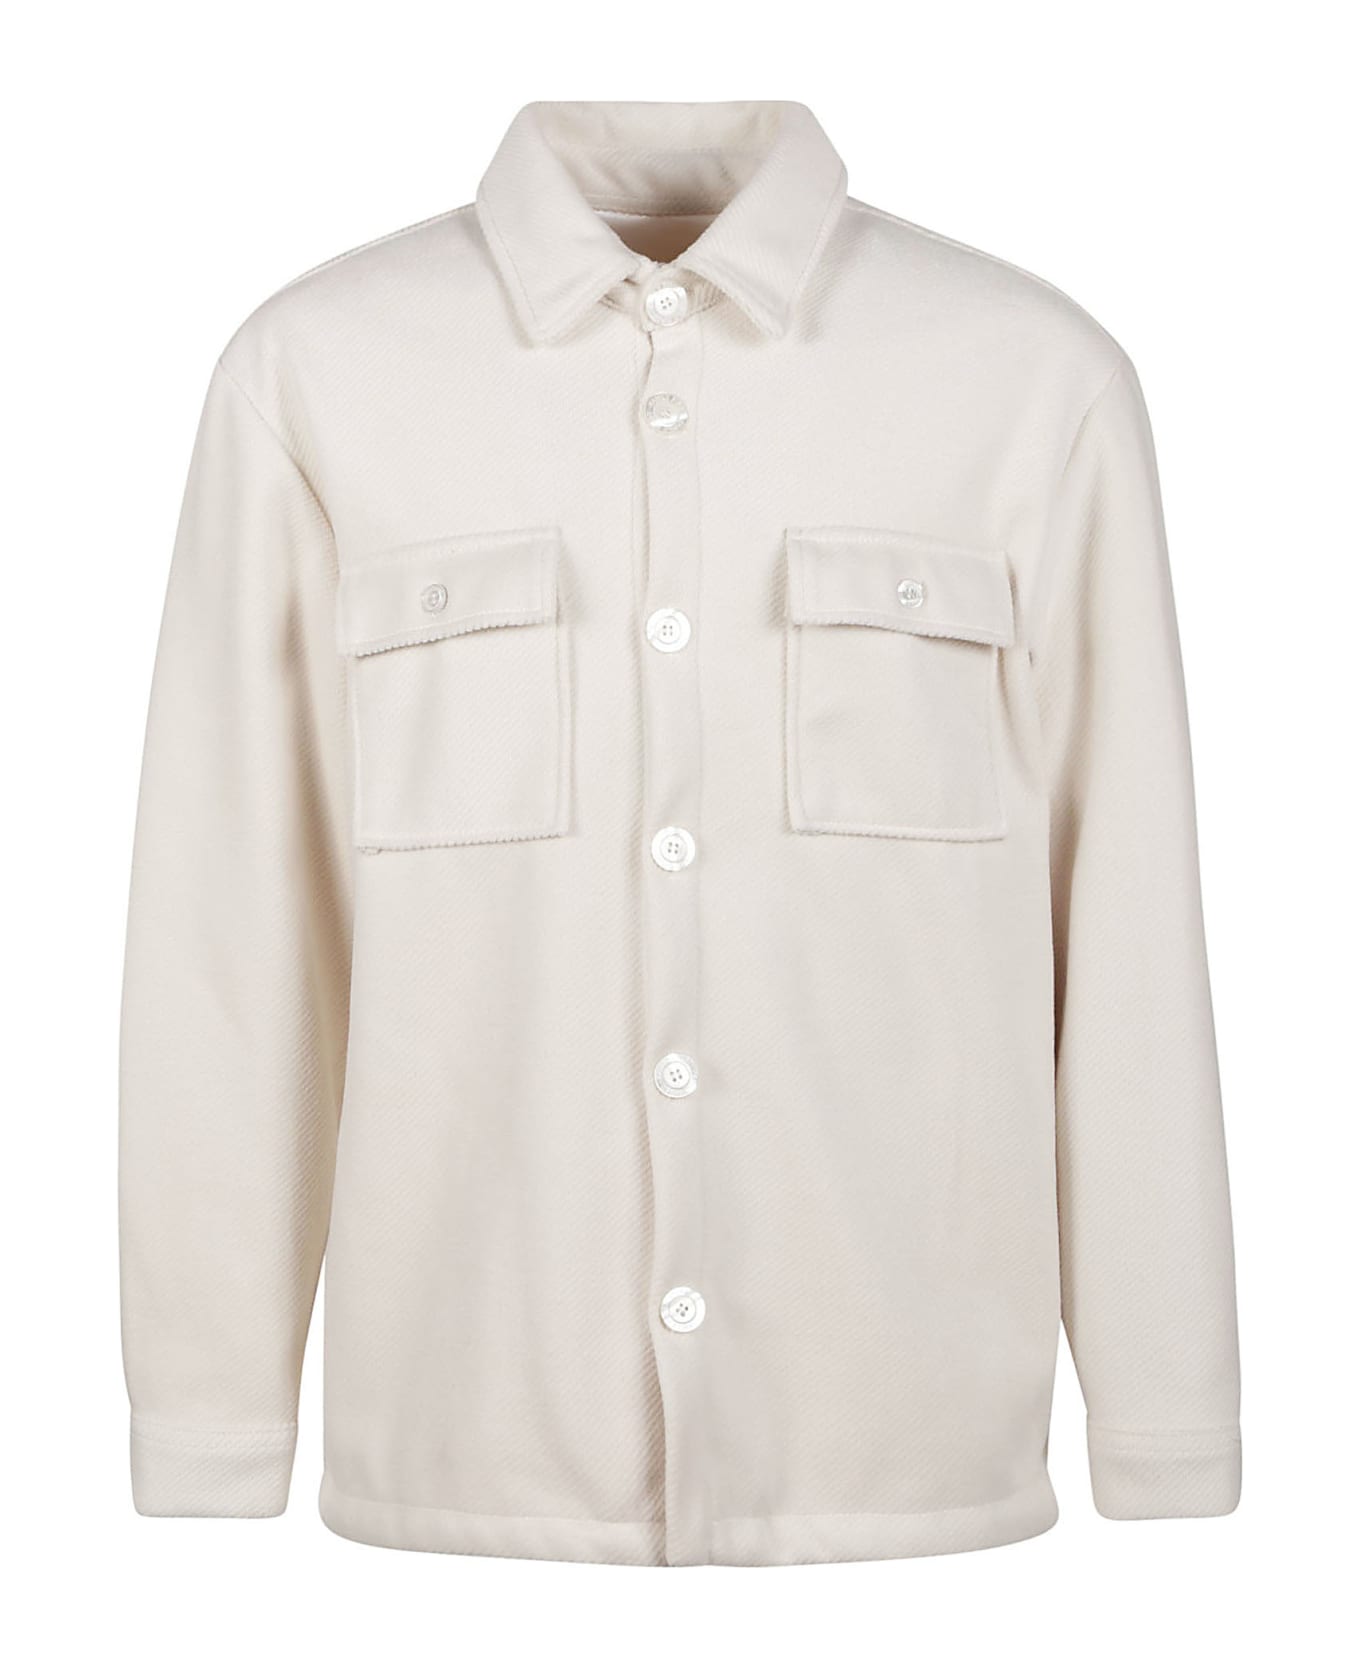 Family First Milano Shirt Jacket - WHITE ジャケット